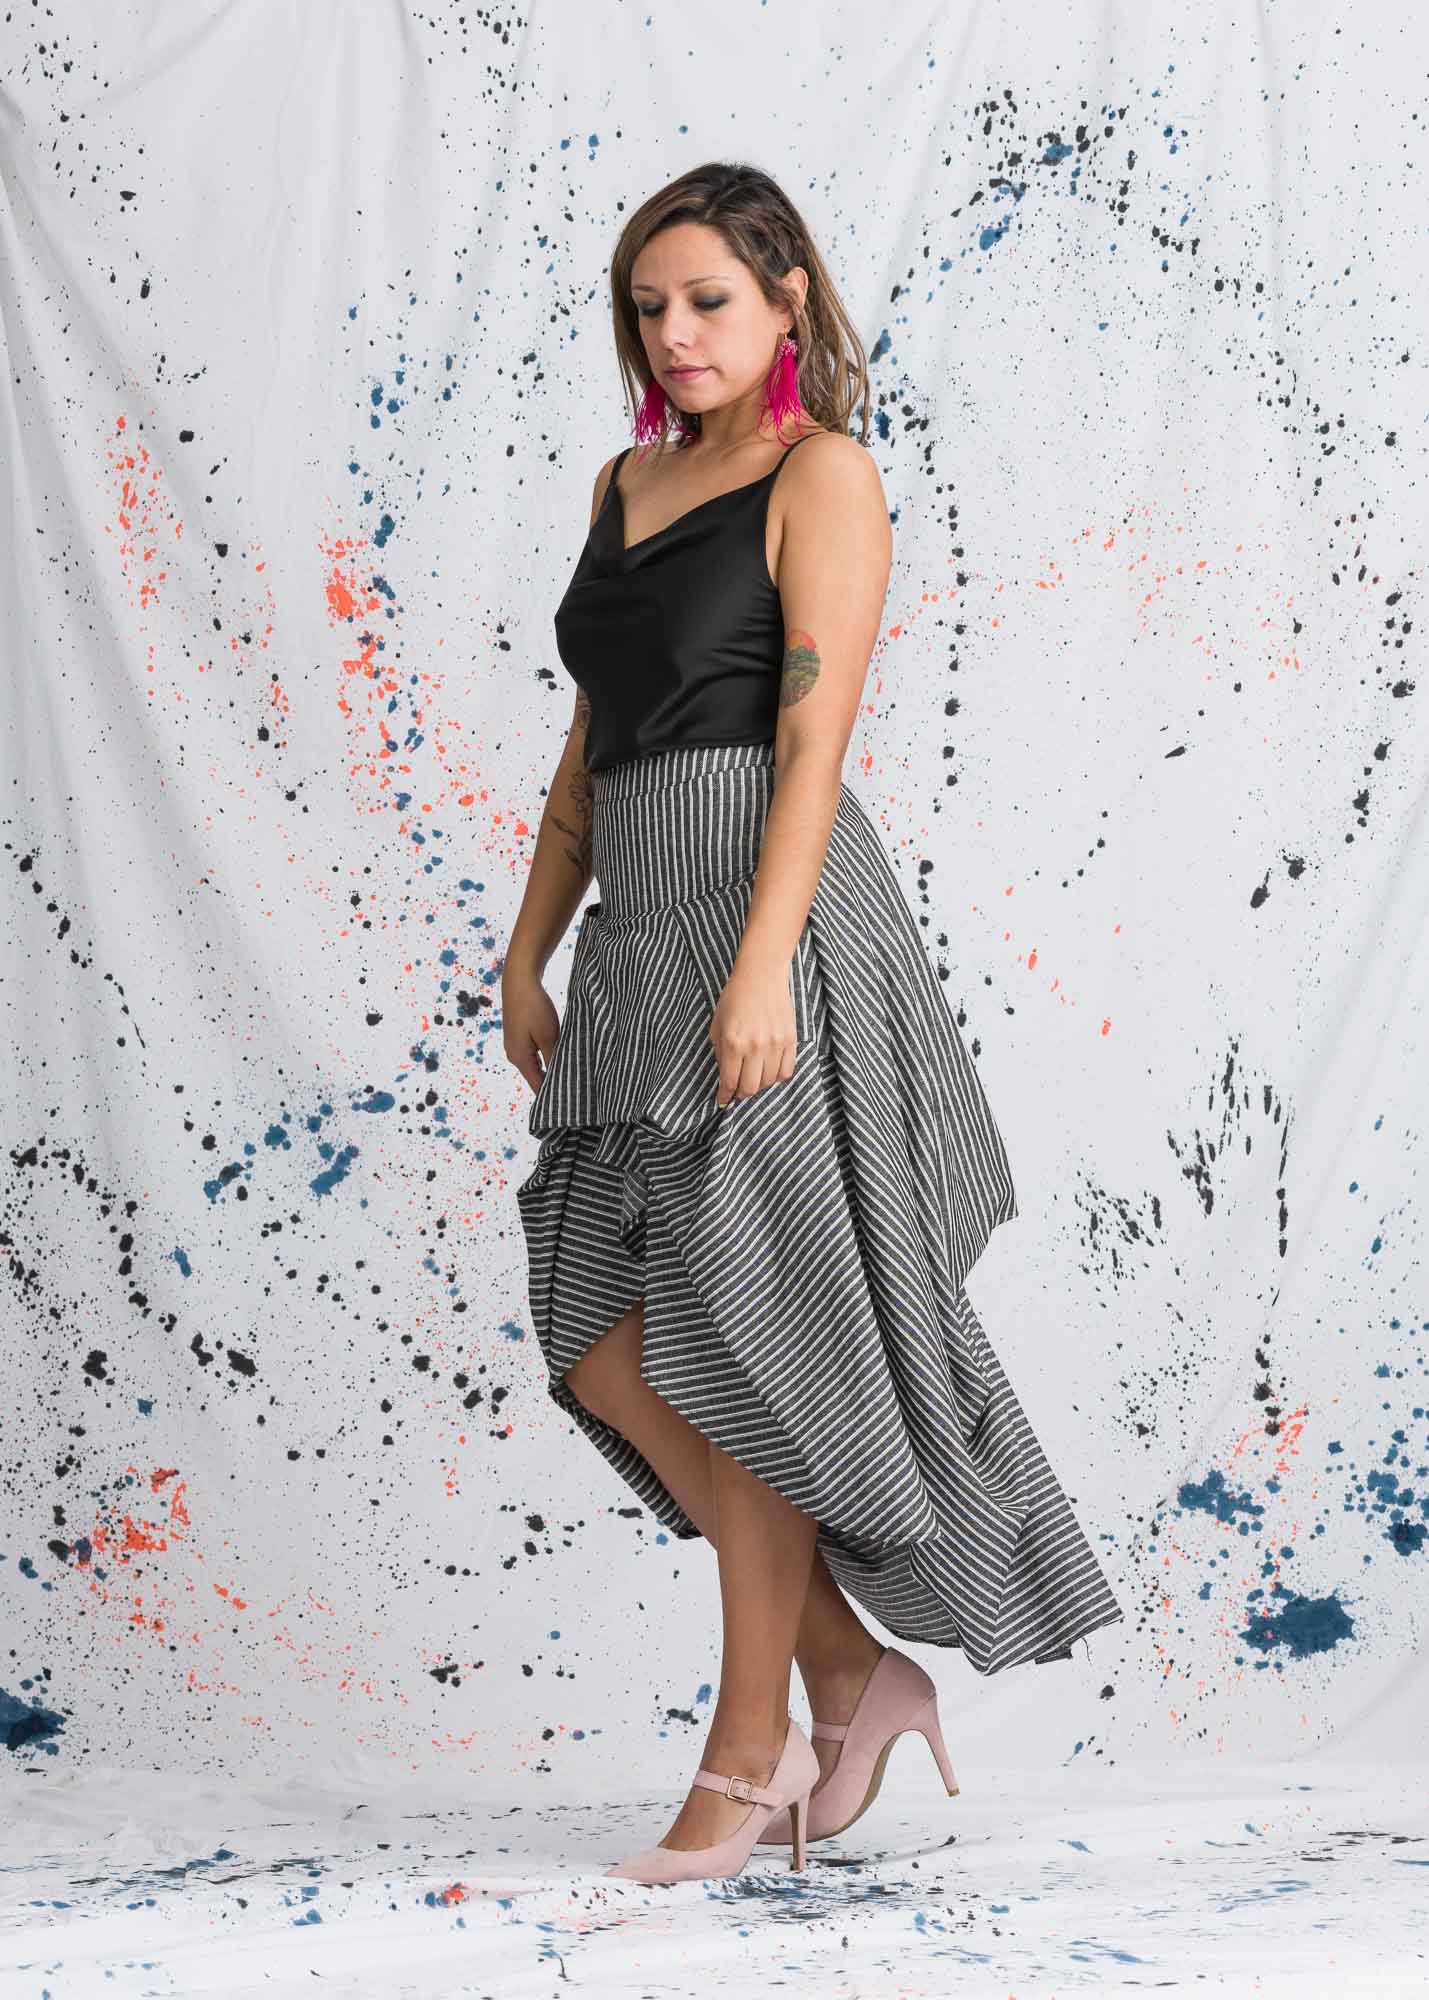 black camisole black and gray asymmetrical skirt | Lisa Maco Photography, LLC, Washington, DC